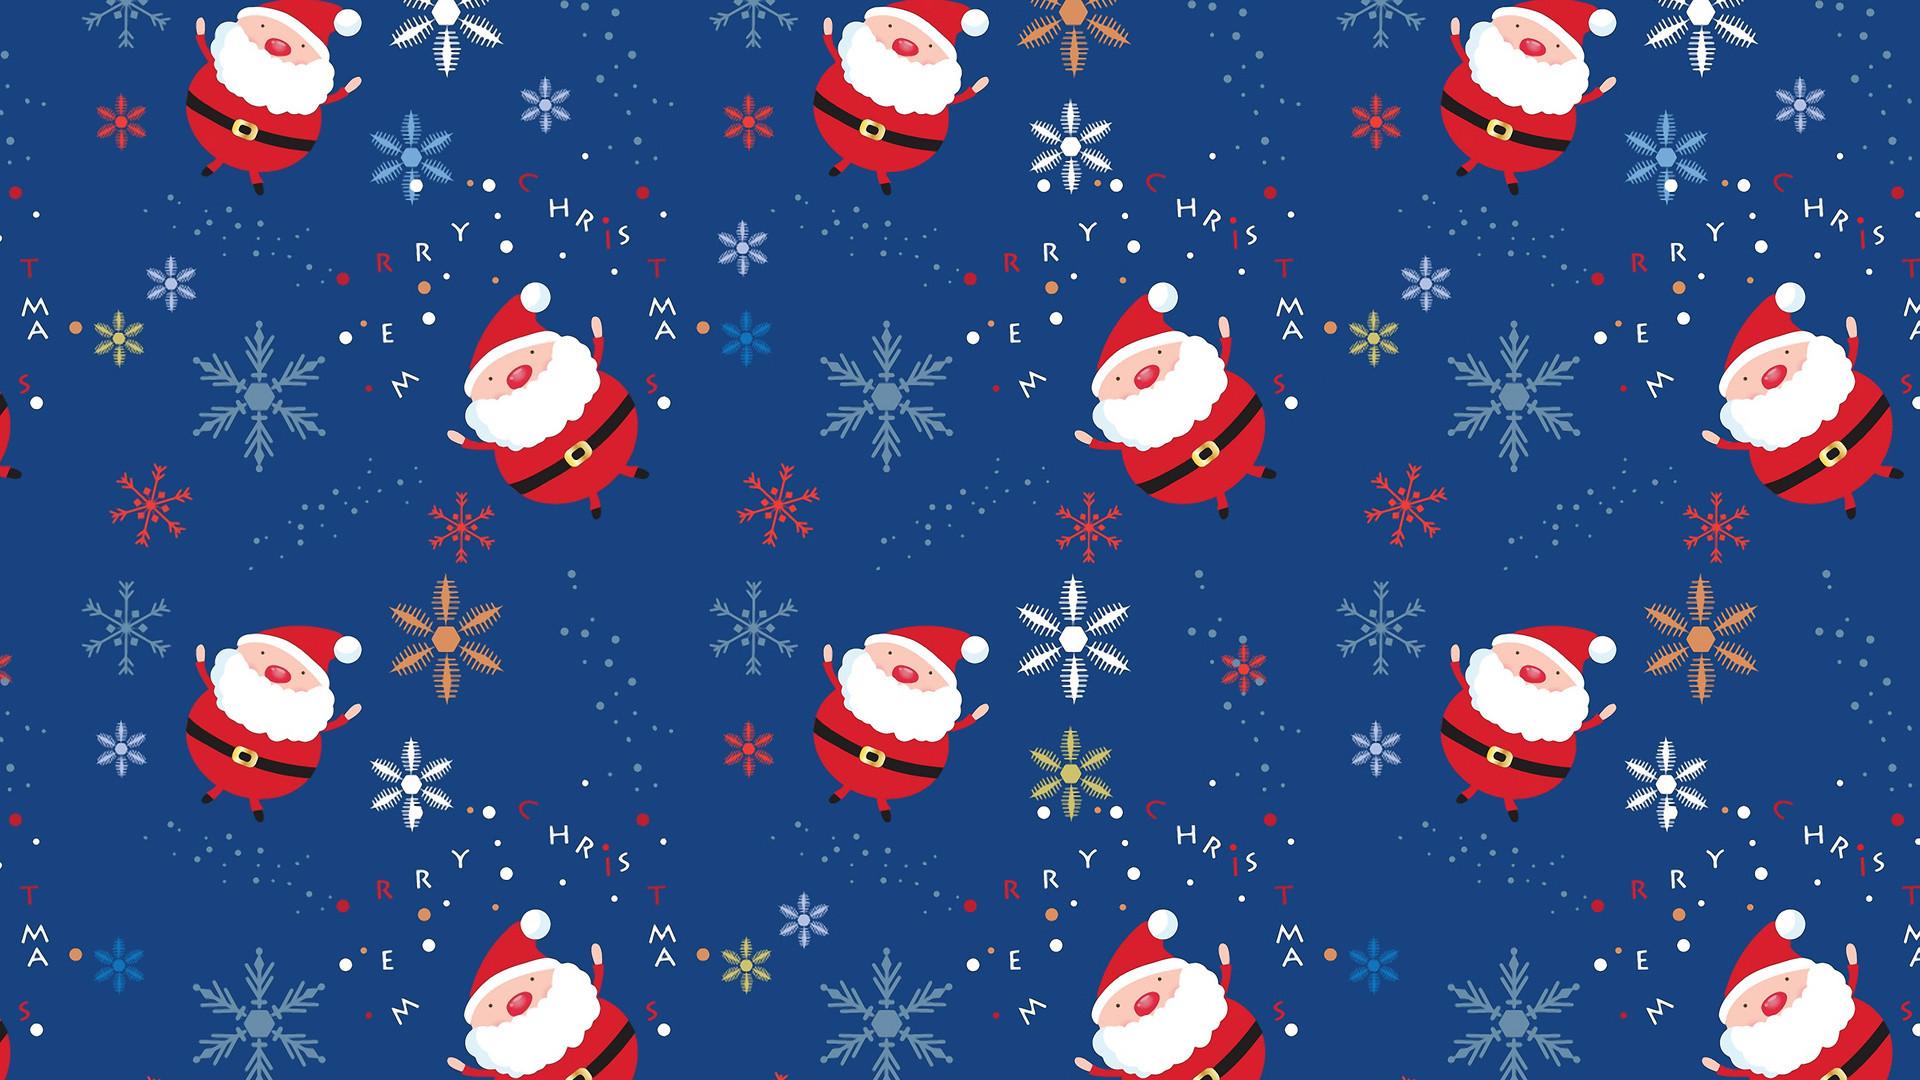 Cartoon Christmas Background Images  Free Download on Freepik